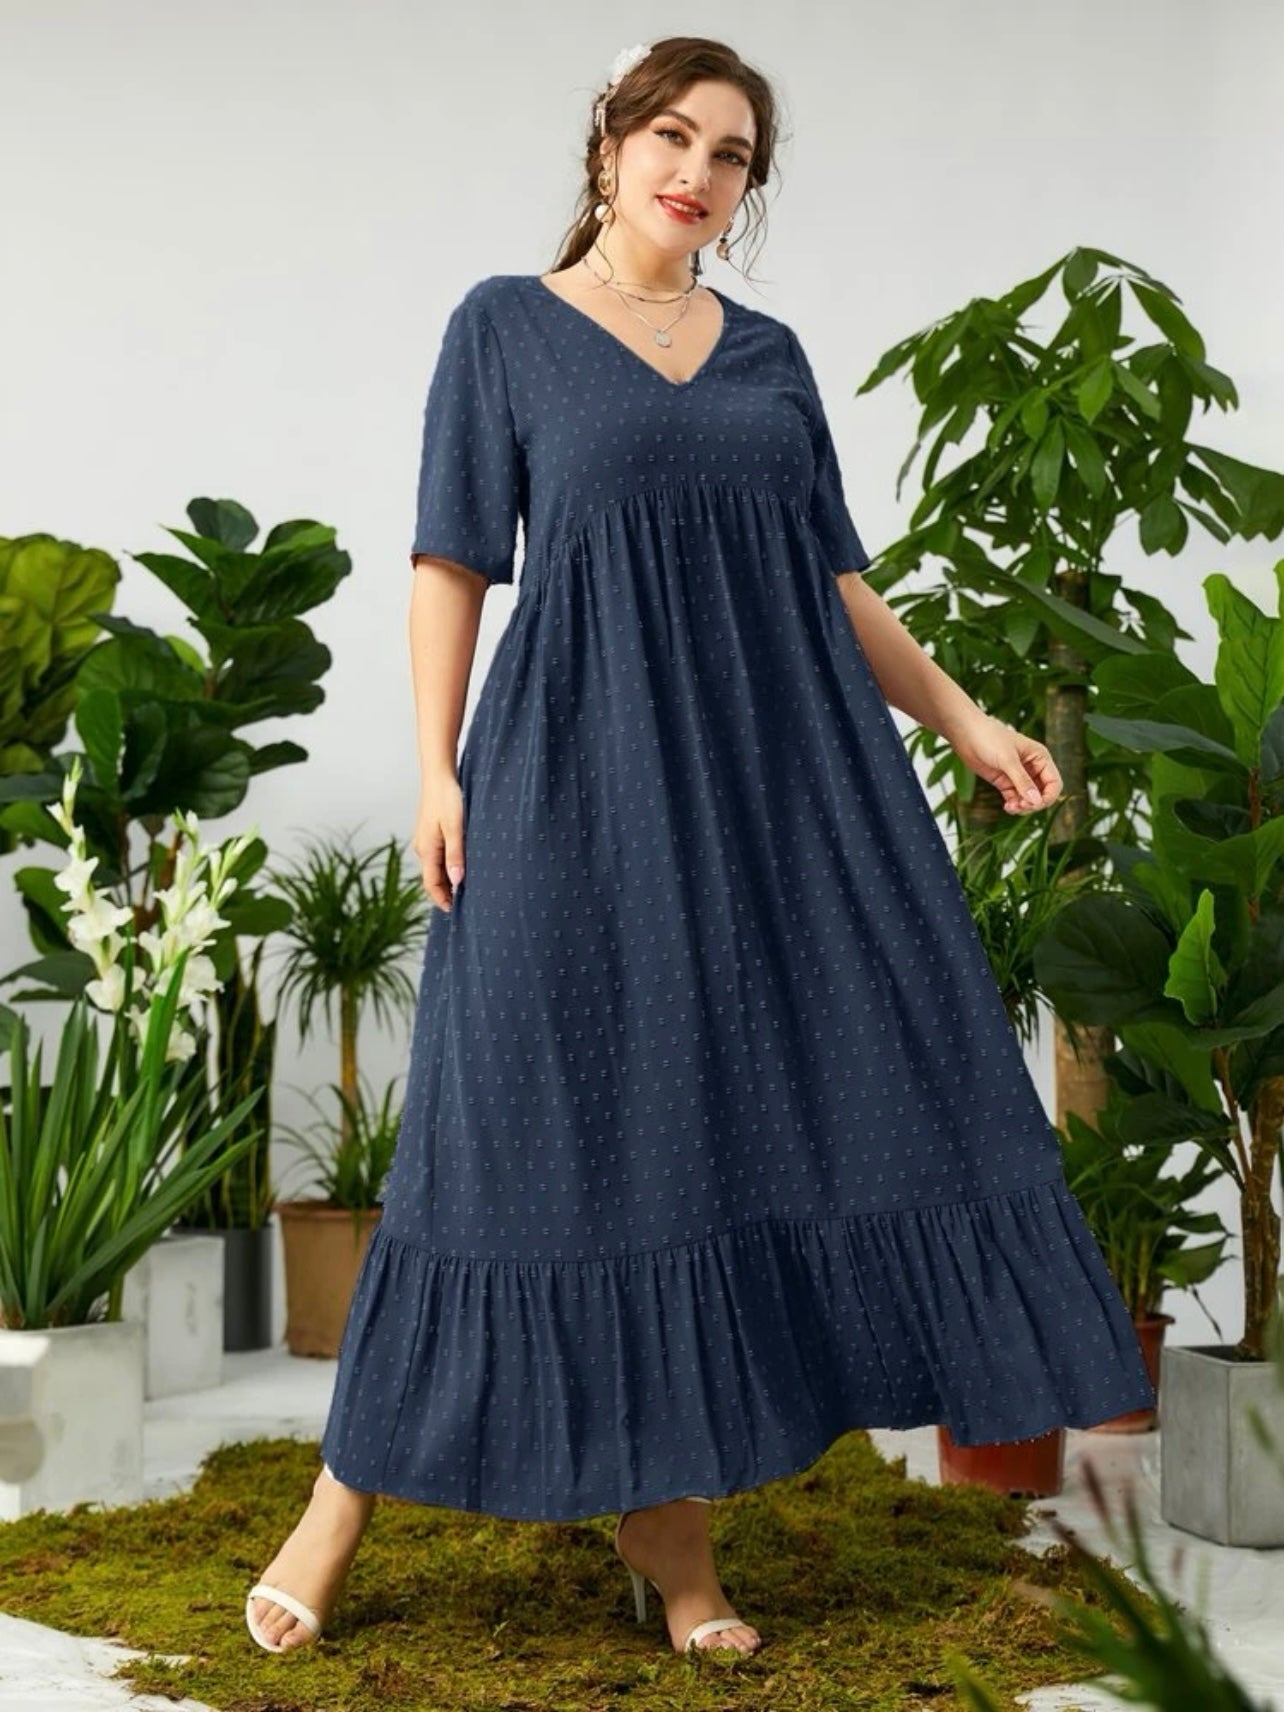 Premium Quality Embroidery Pattern Ruffle Hem Plus Size Dress